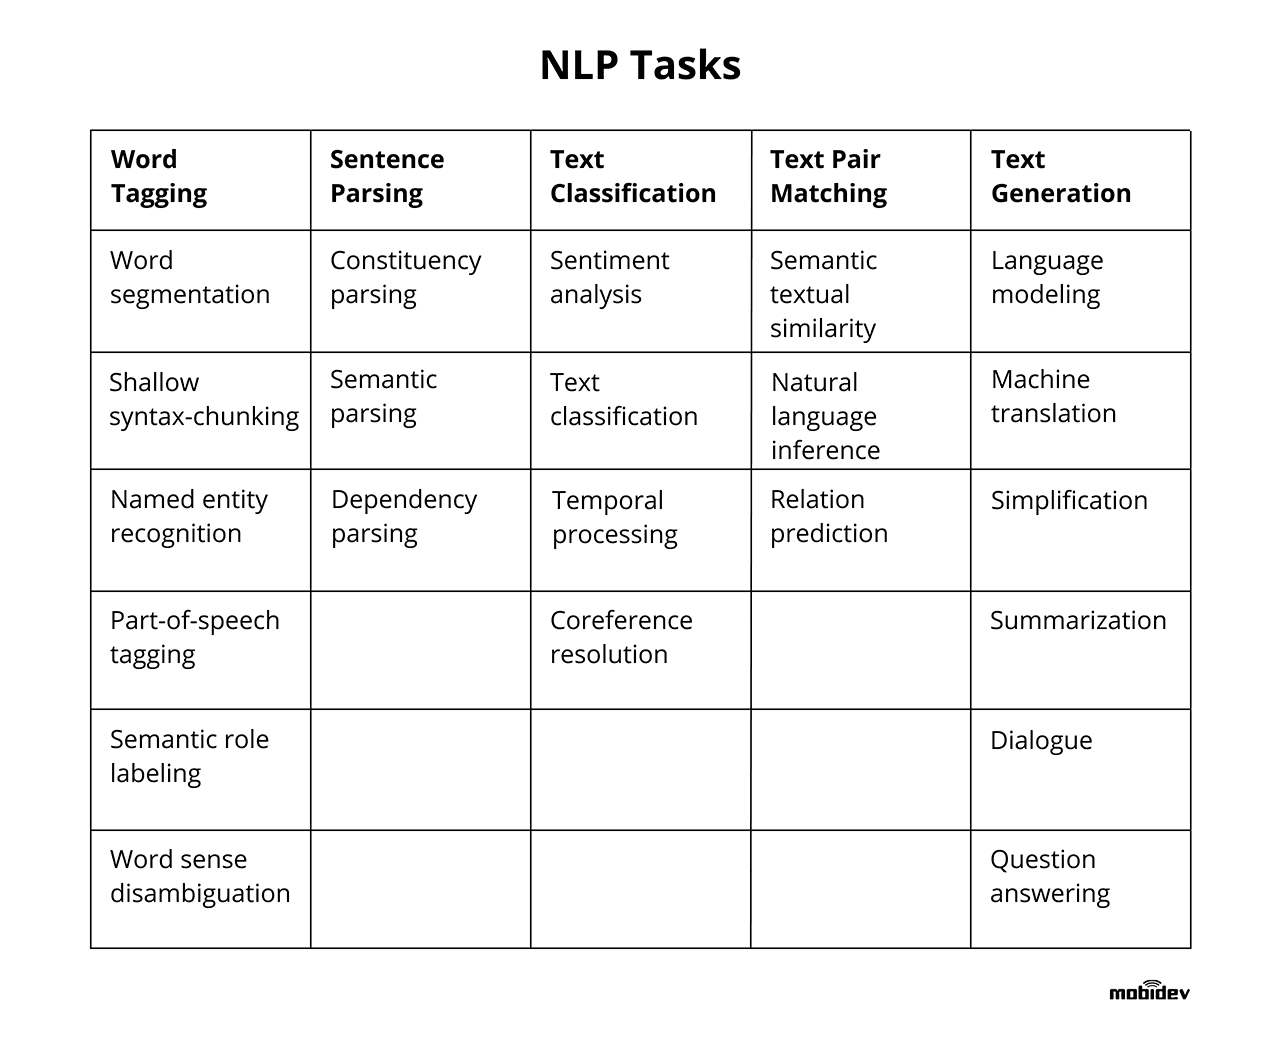 Various NLP tasks performed by modern NLP software